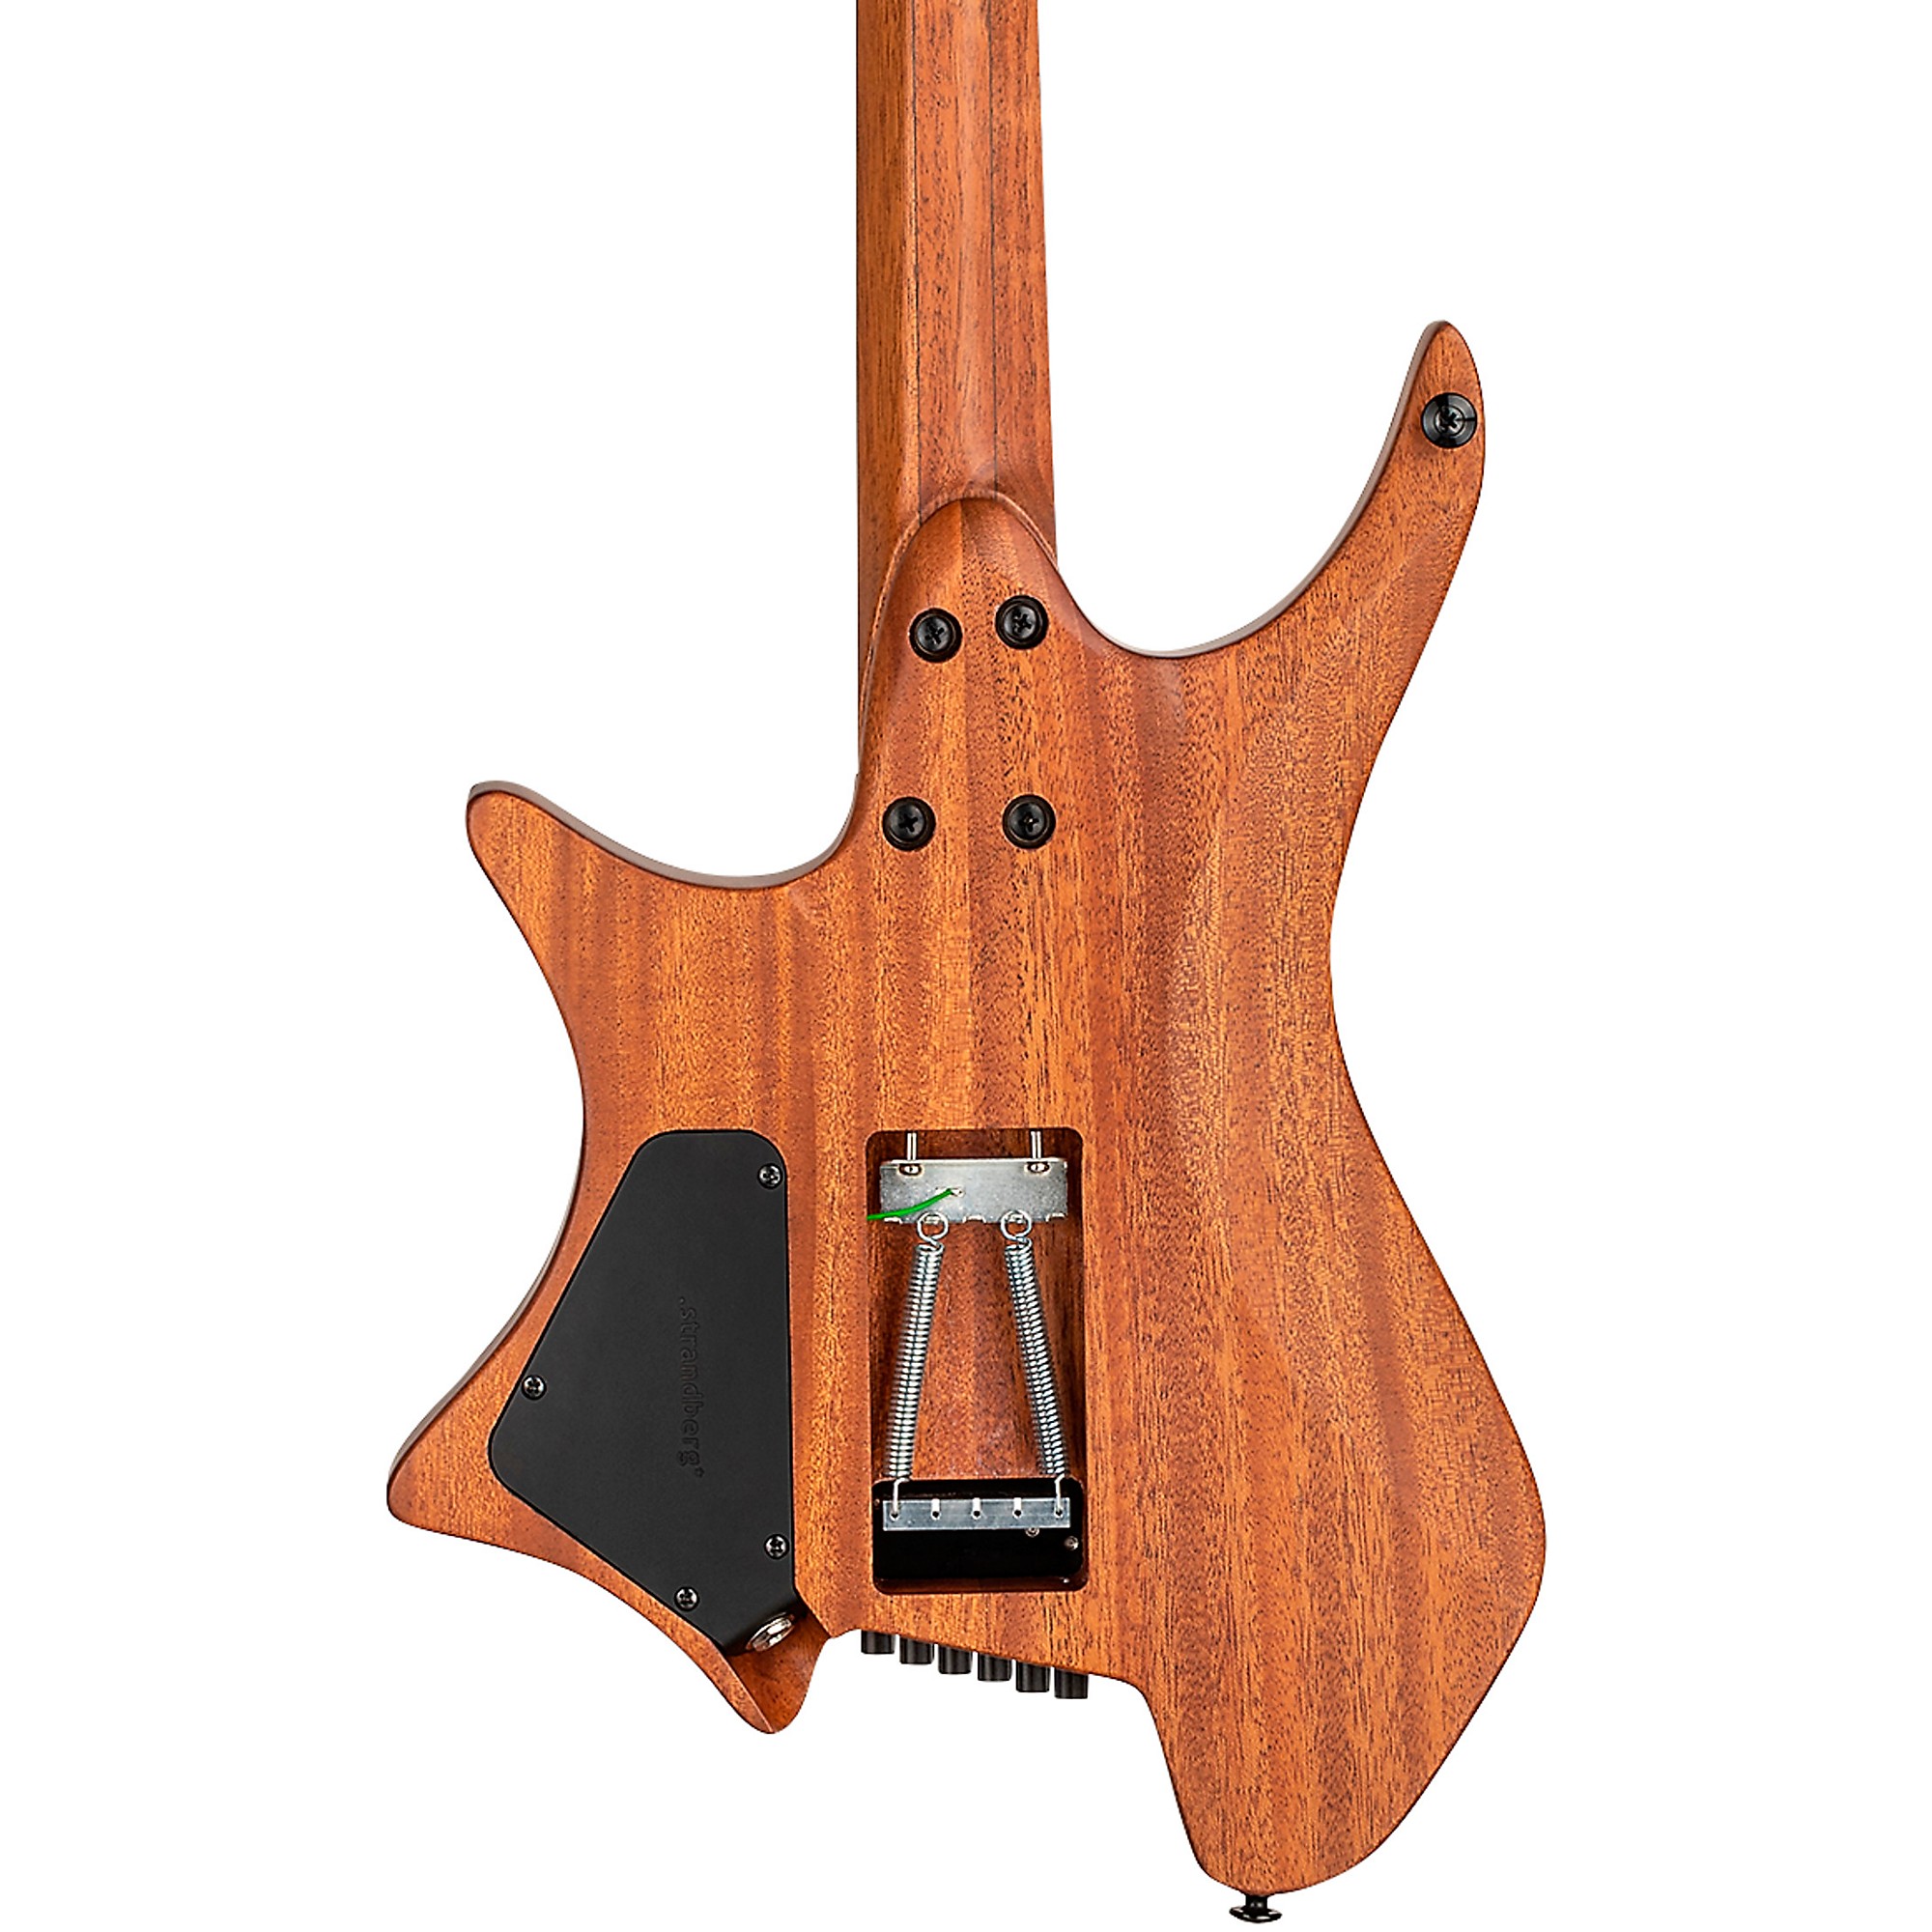 Platinum strandberg Boden Prog NX 6 Plini Edition Electric Guitar 